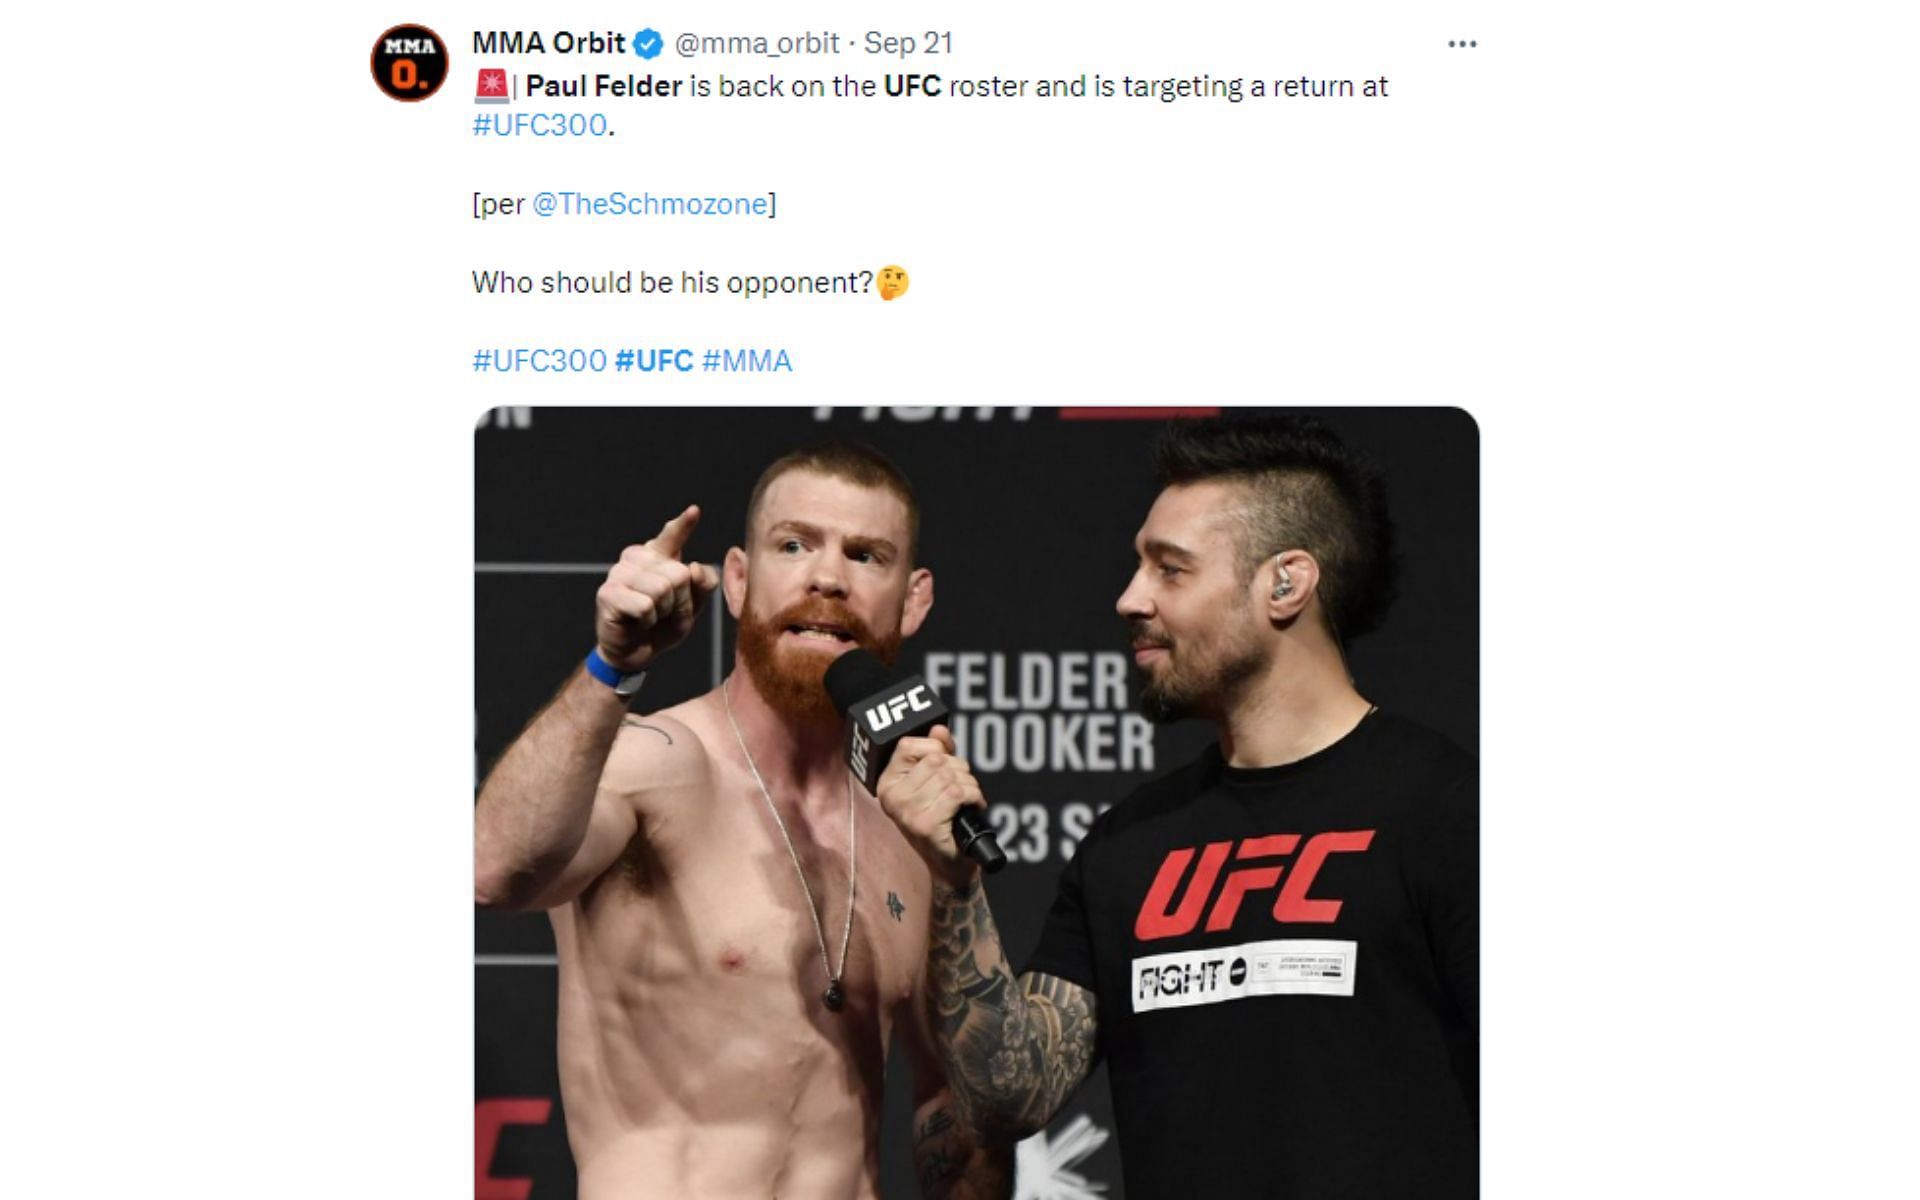 MMA Orbit tweet regarding potential return at UFC 300.